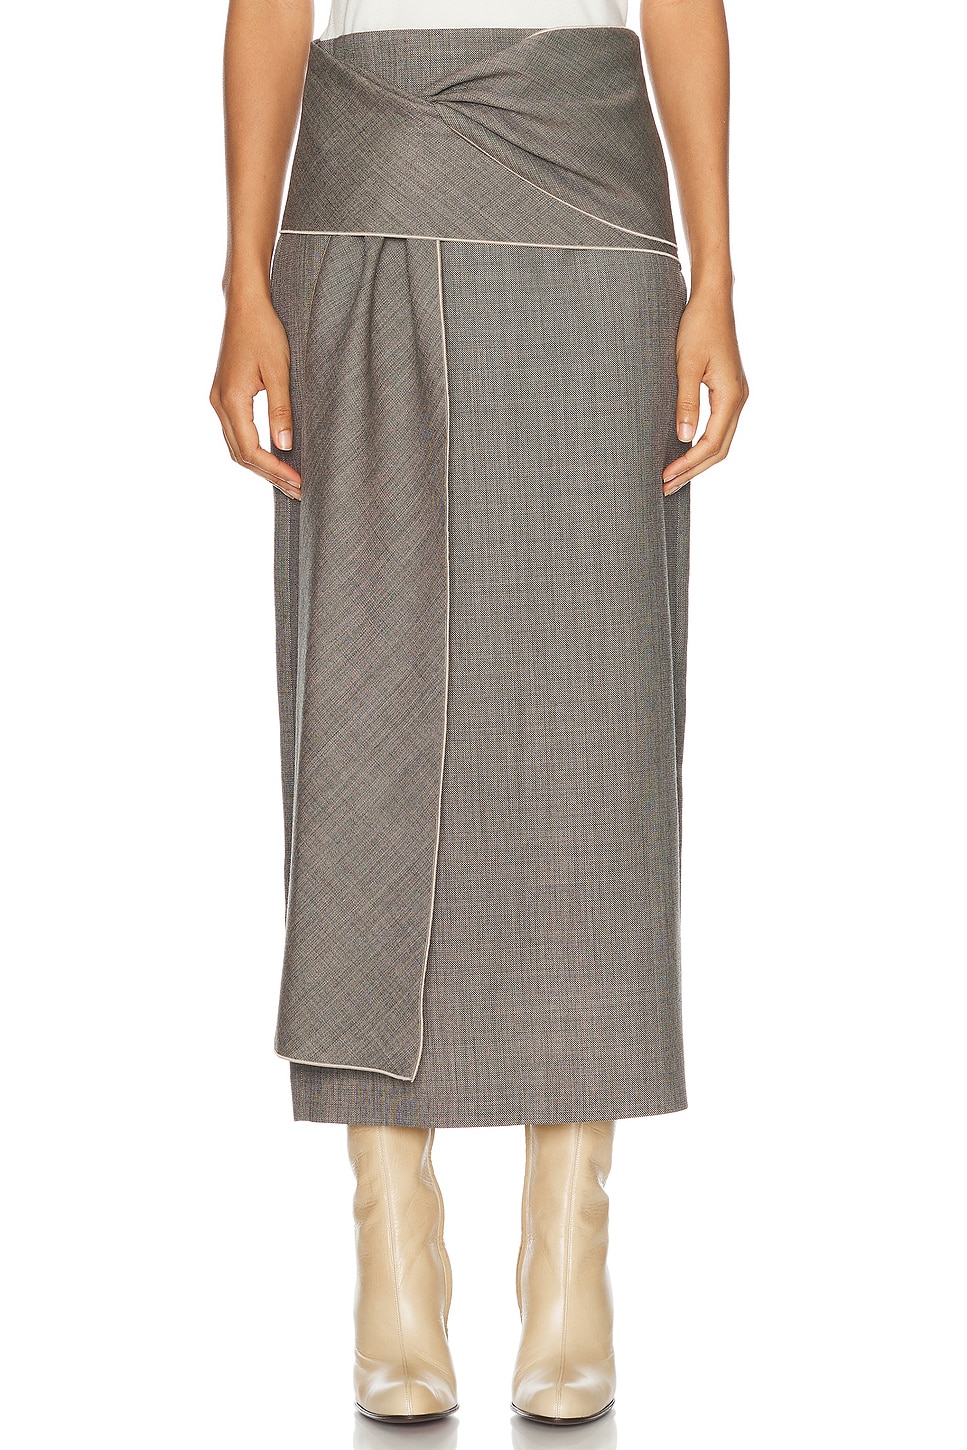 Laz Skirt in Grey